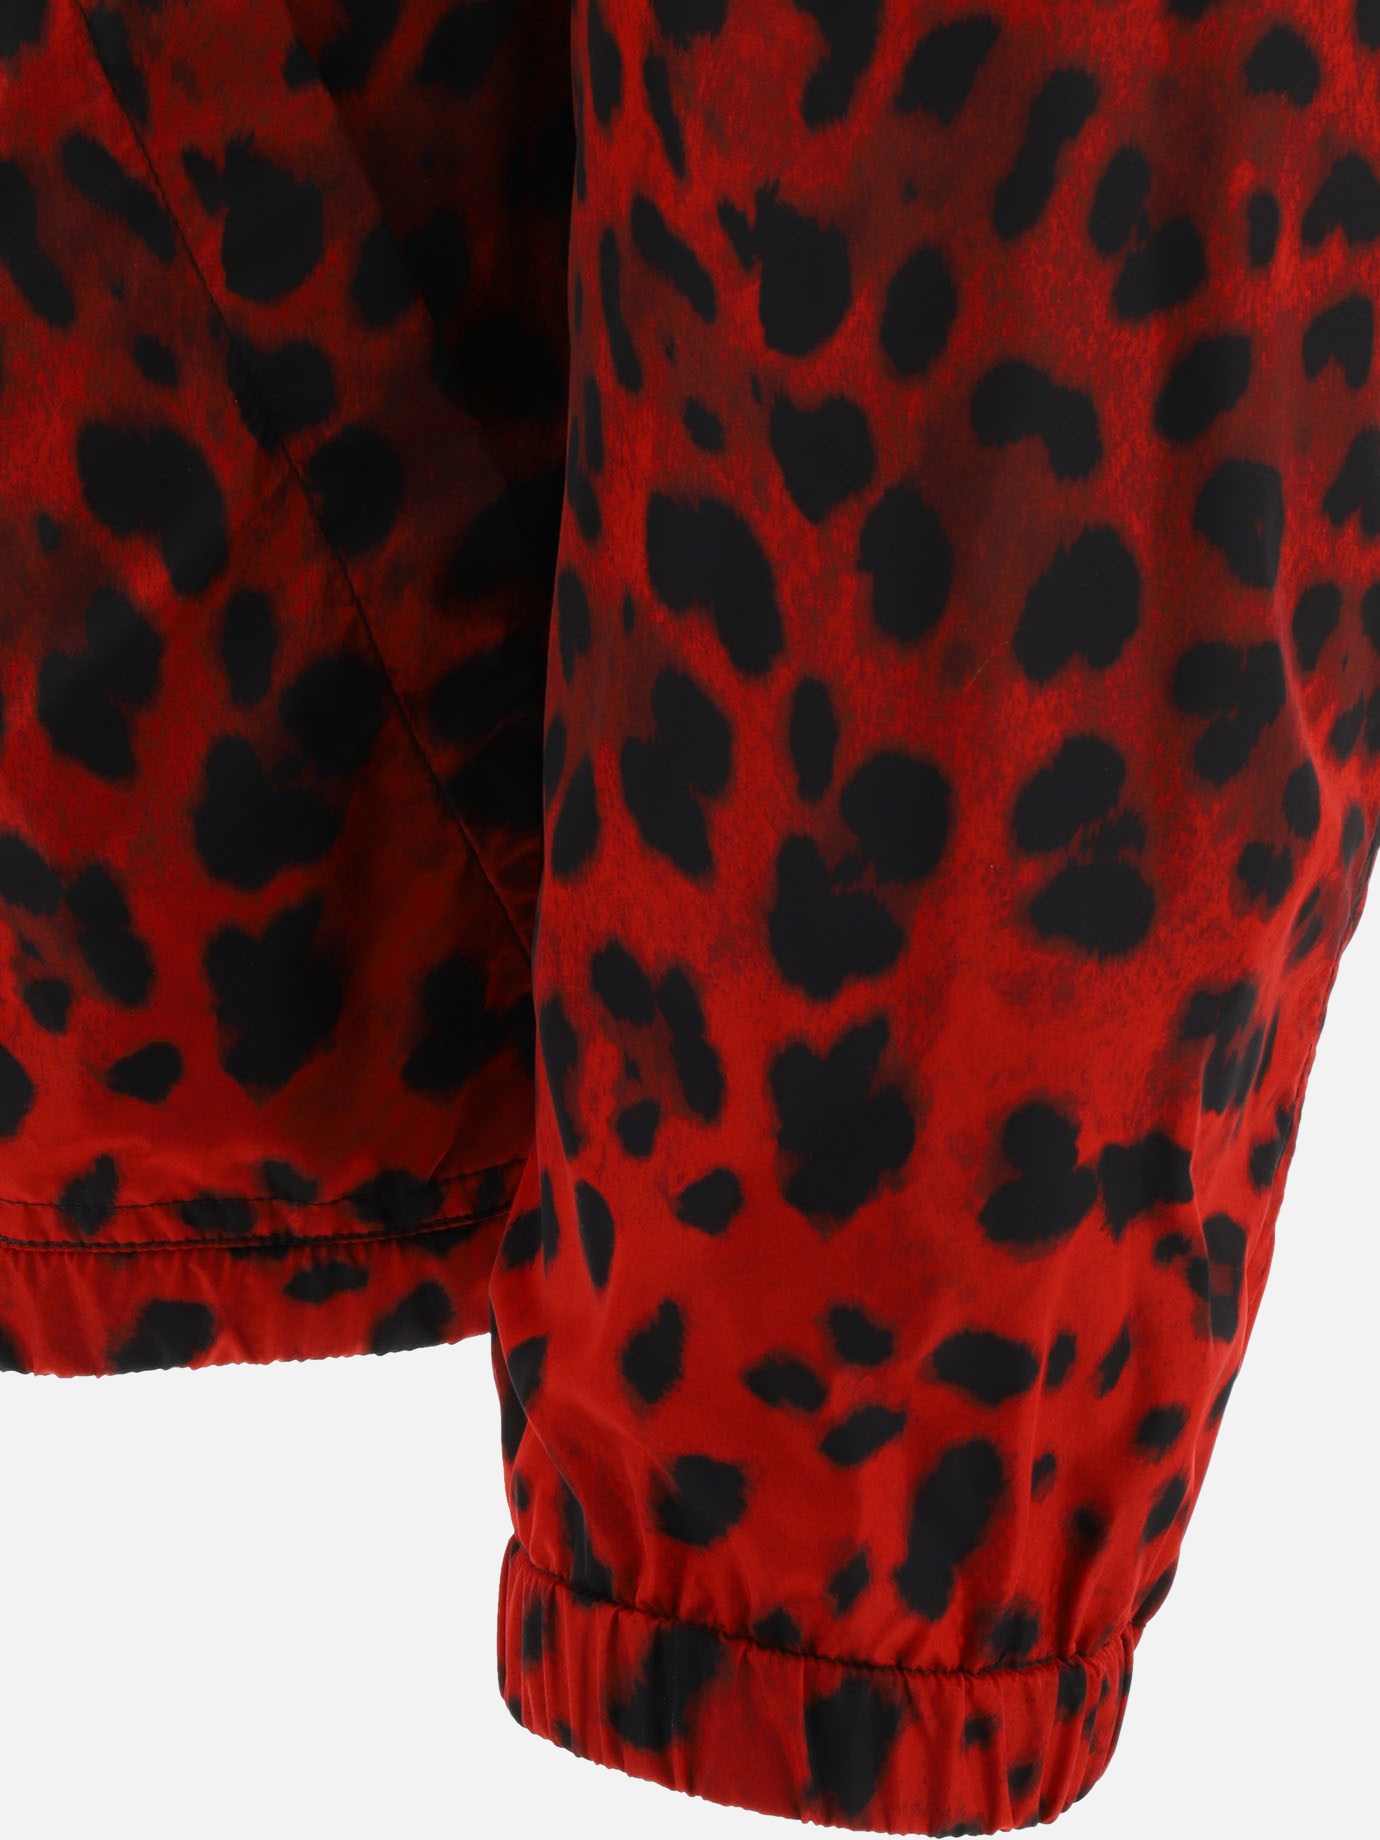 Giacca a vento  Leopard  by Dolce & Gabbana